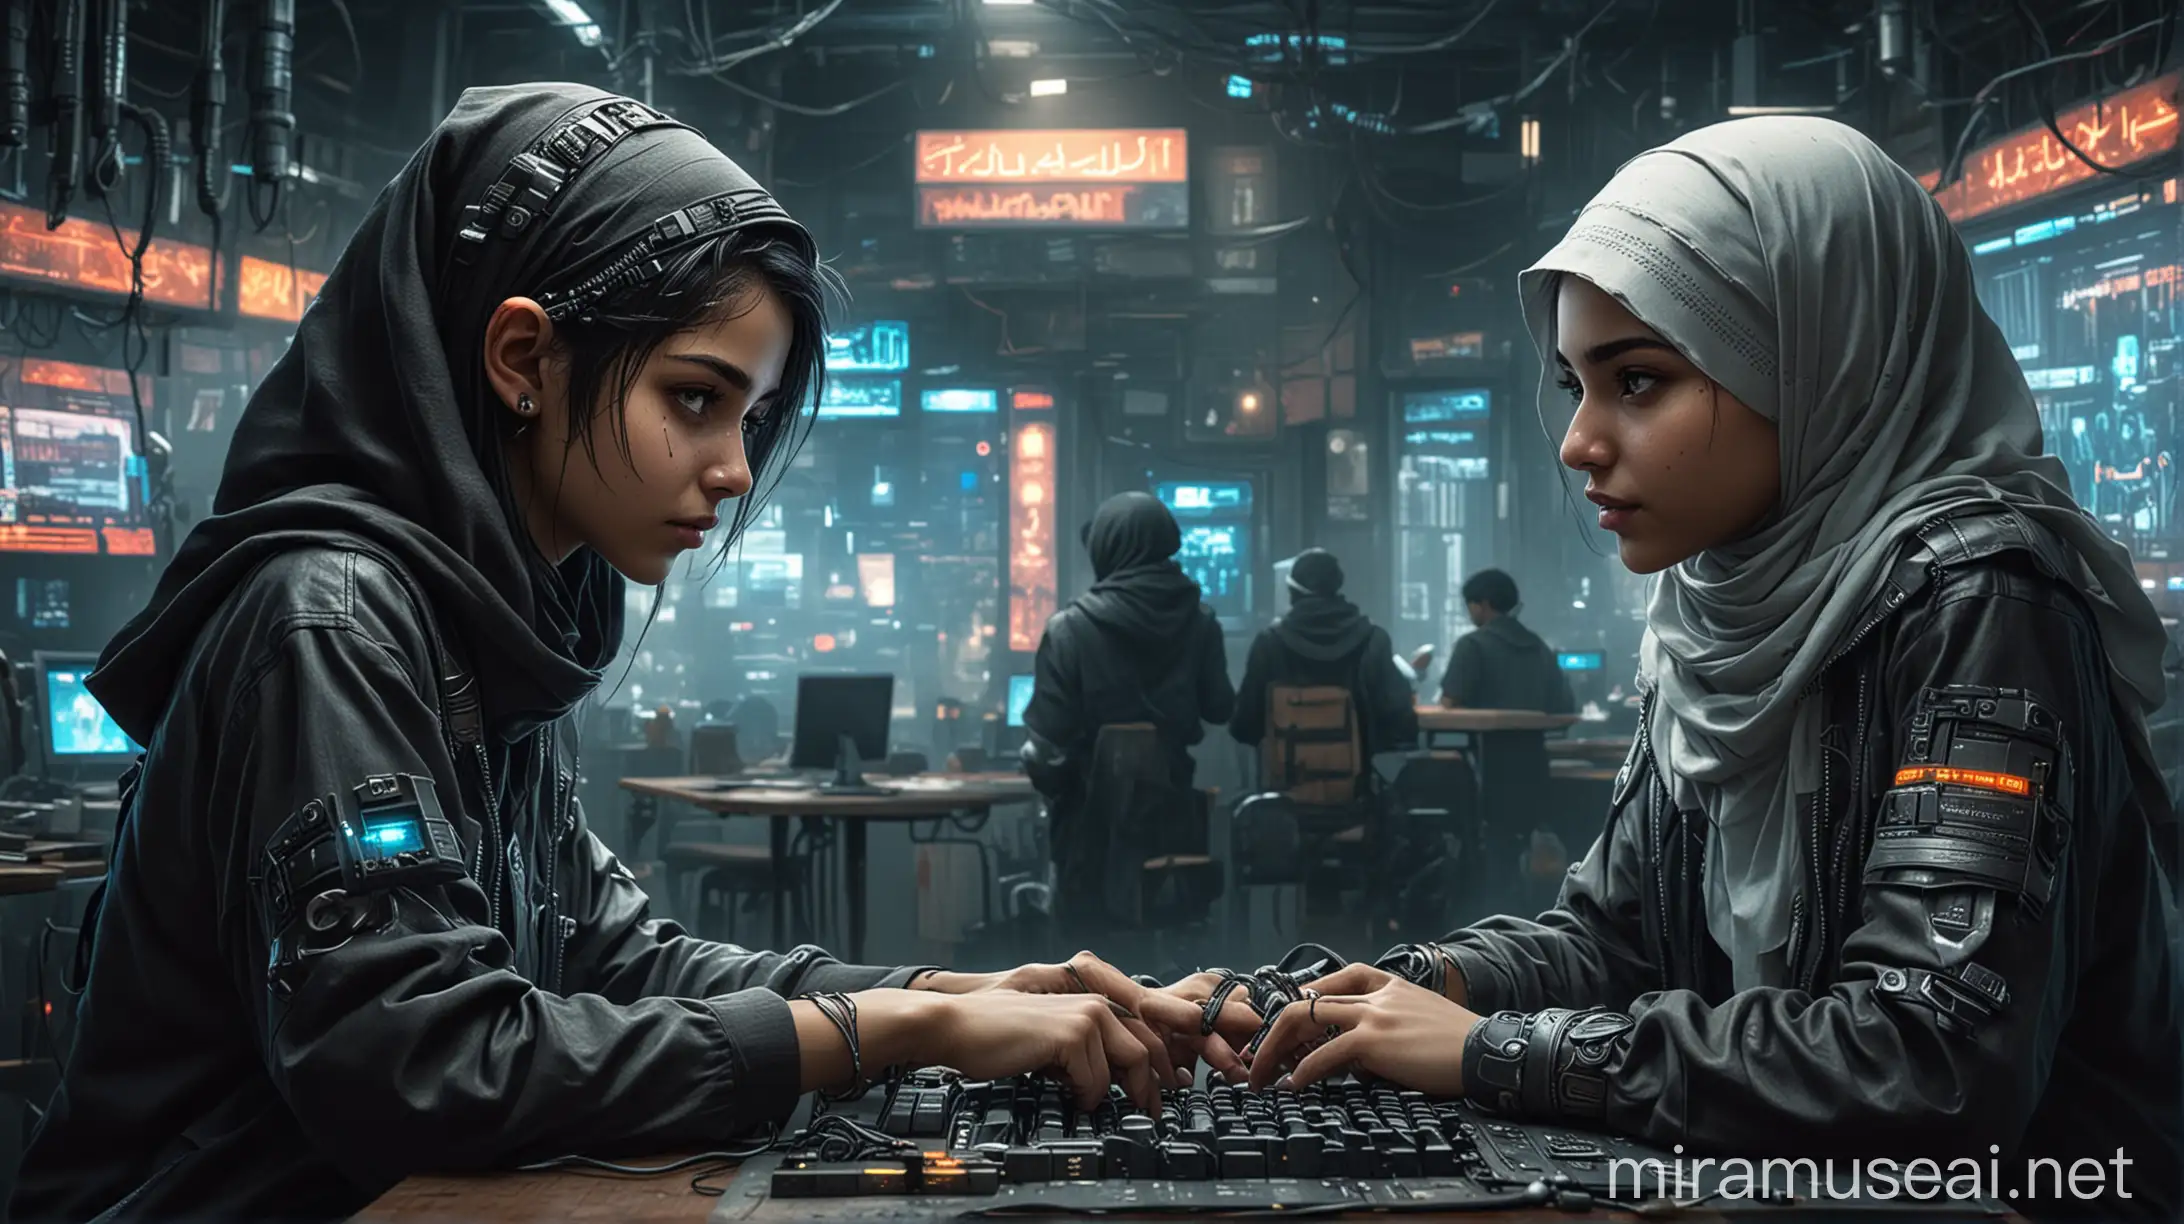 Cyberpunk Style 18YearOld Student and Muslim Girl Playing Game